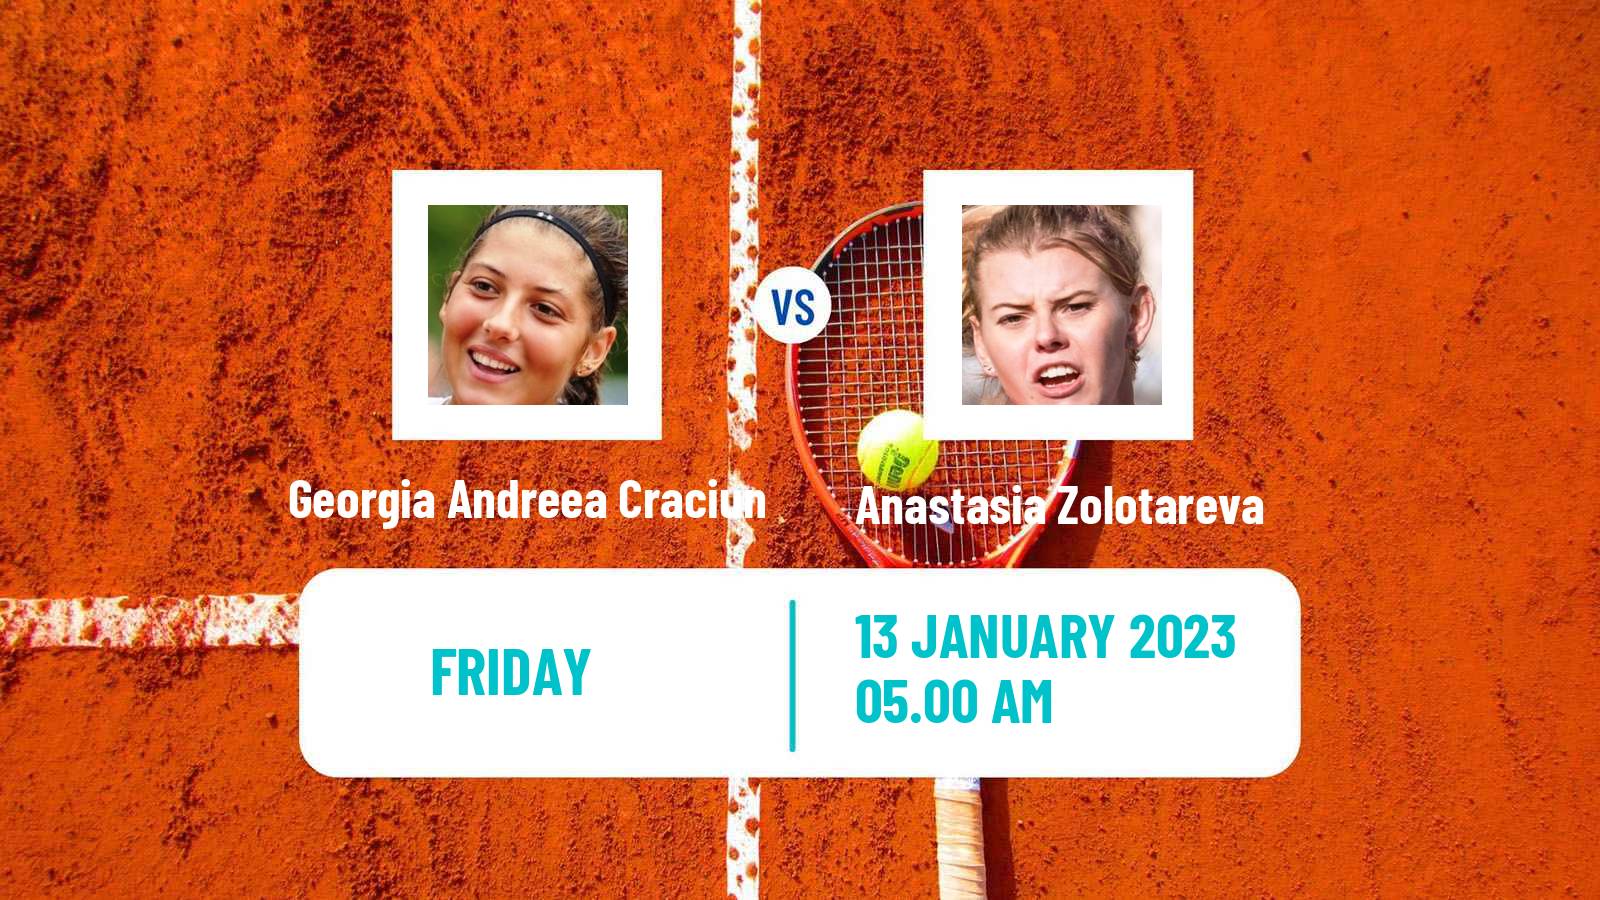 Tennis ITF Tournaments Georgia Andreea Craciun - Anastasia Zolotareva